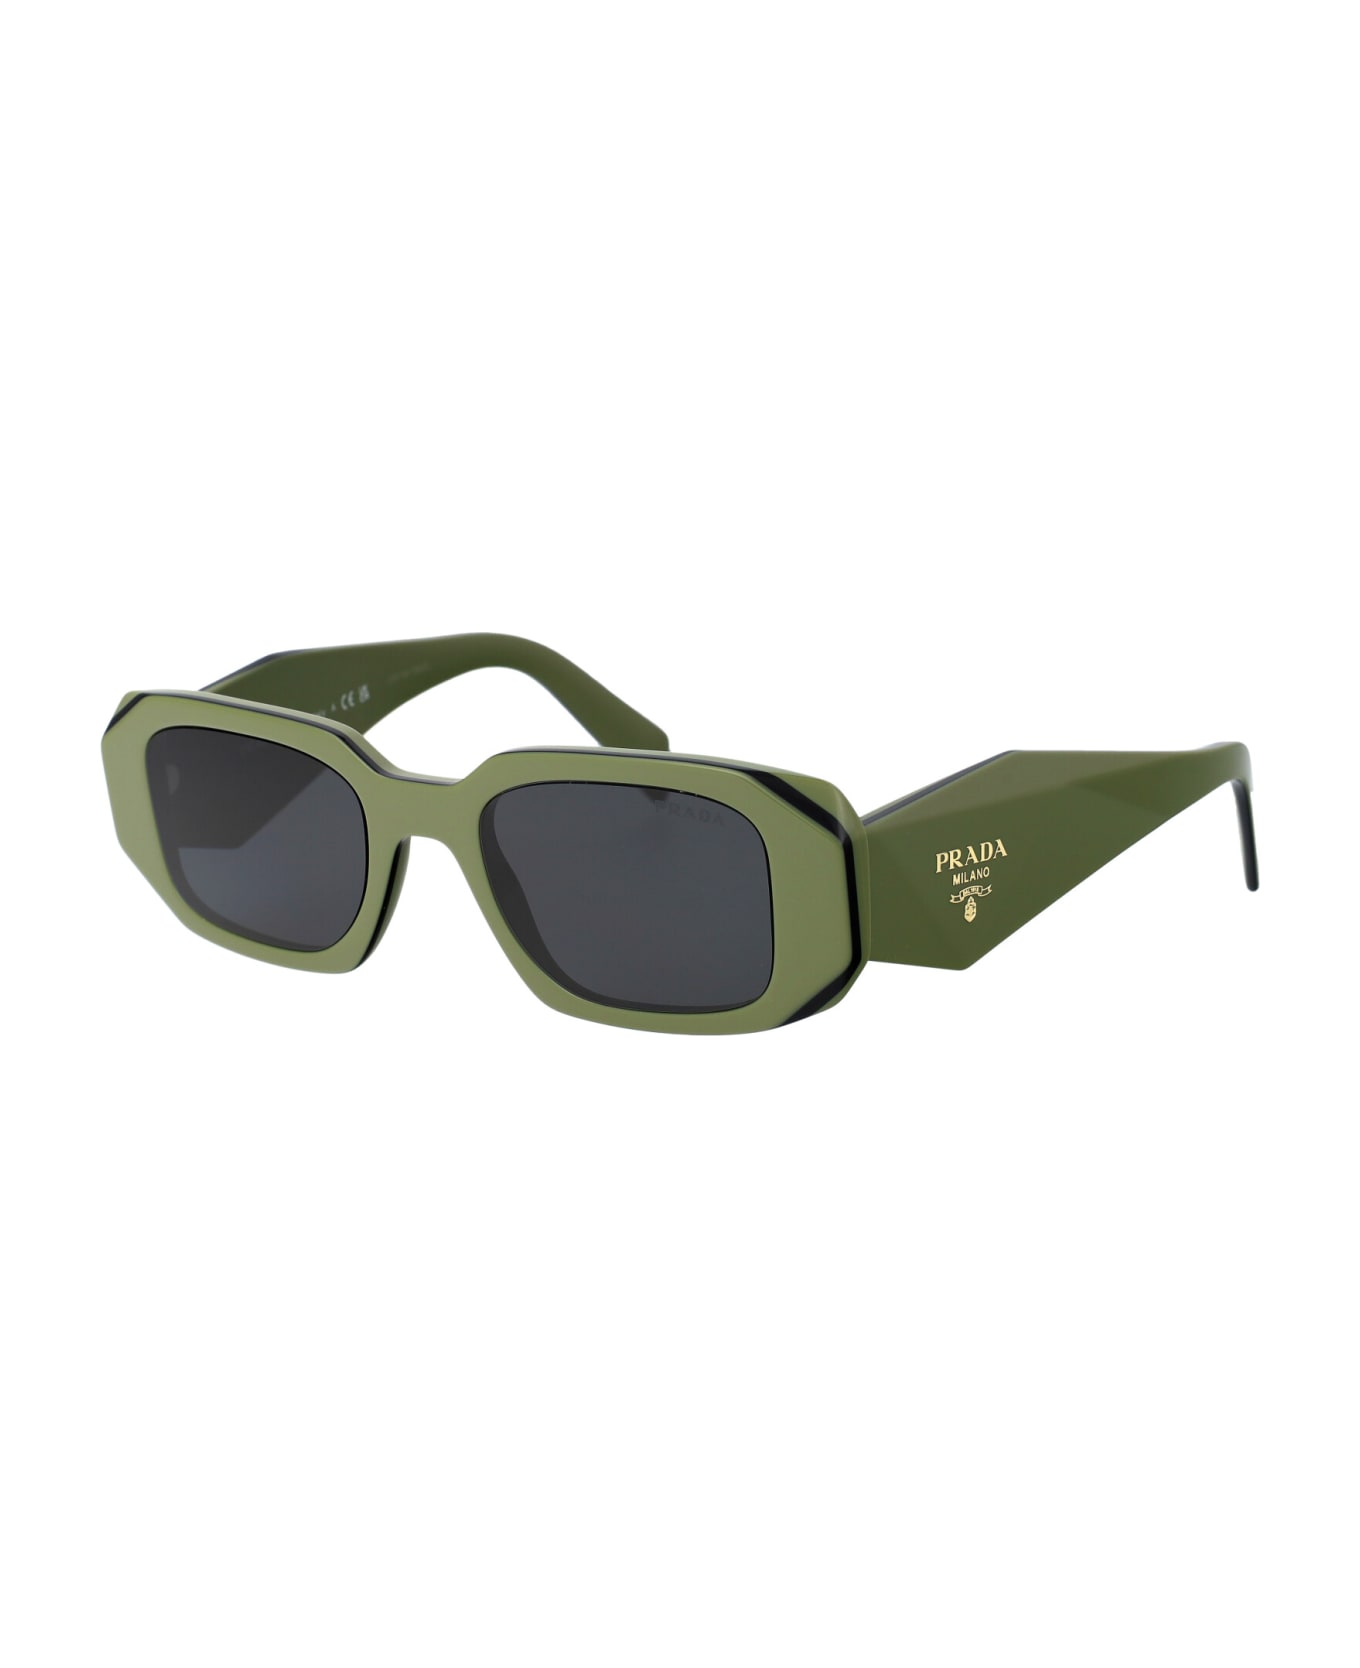 Prada Eyewear 0pr 17ws Sunglasses - 13N5S0 Sage/Black